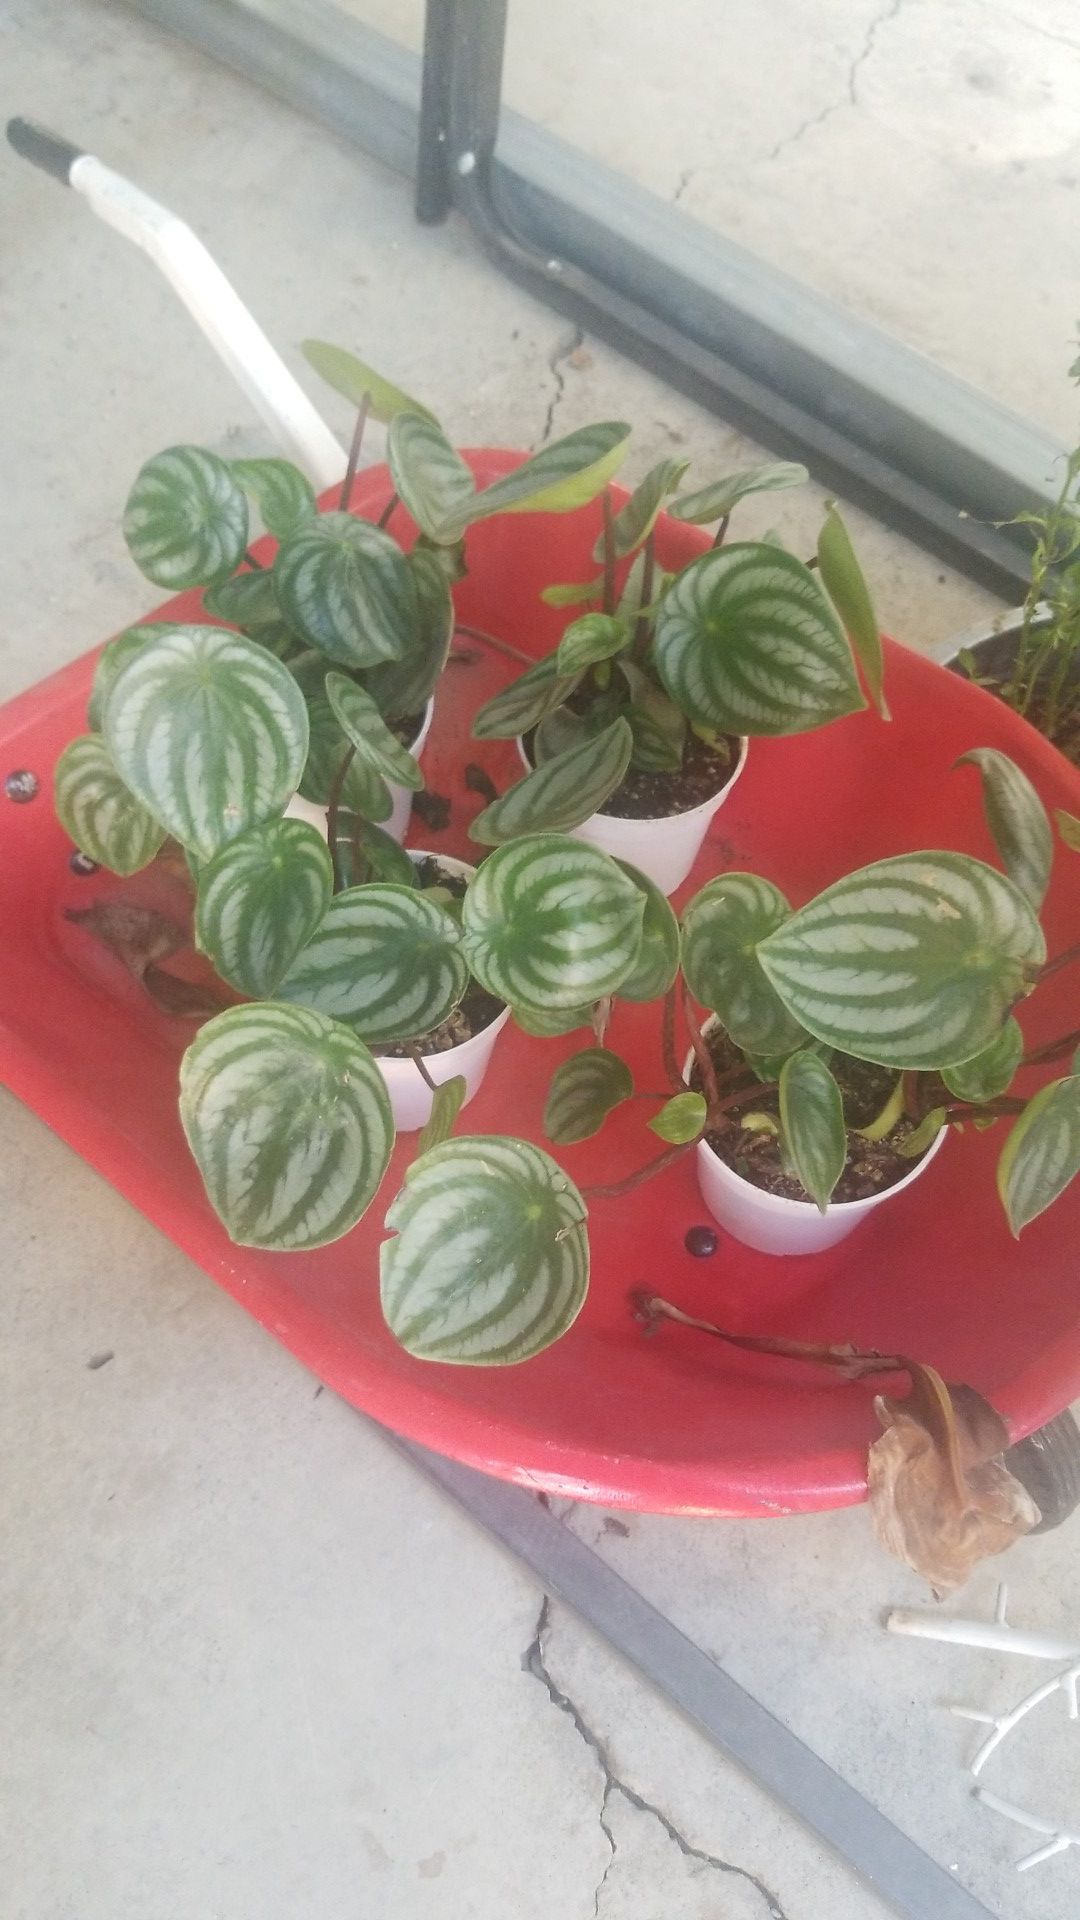 Watermelon plant